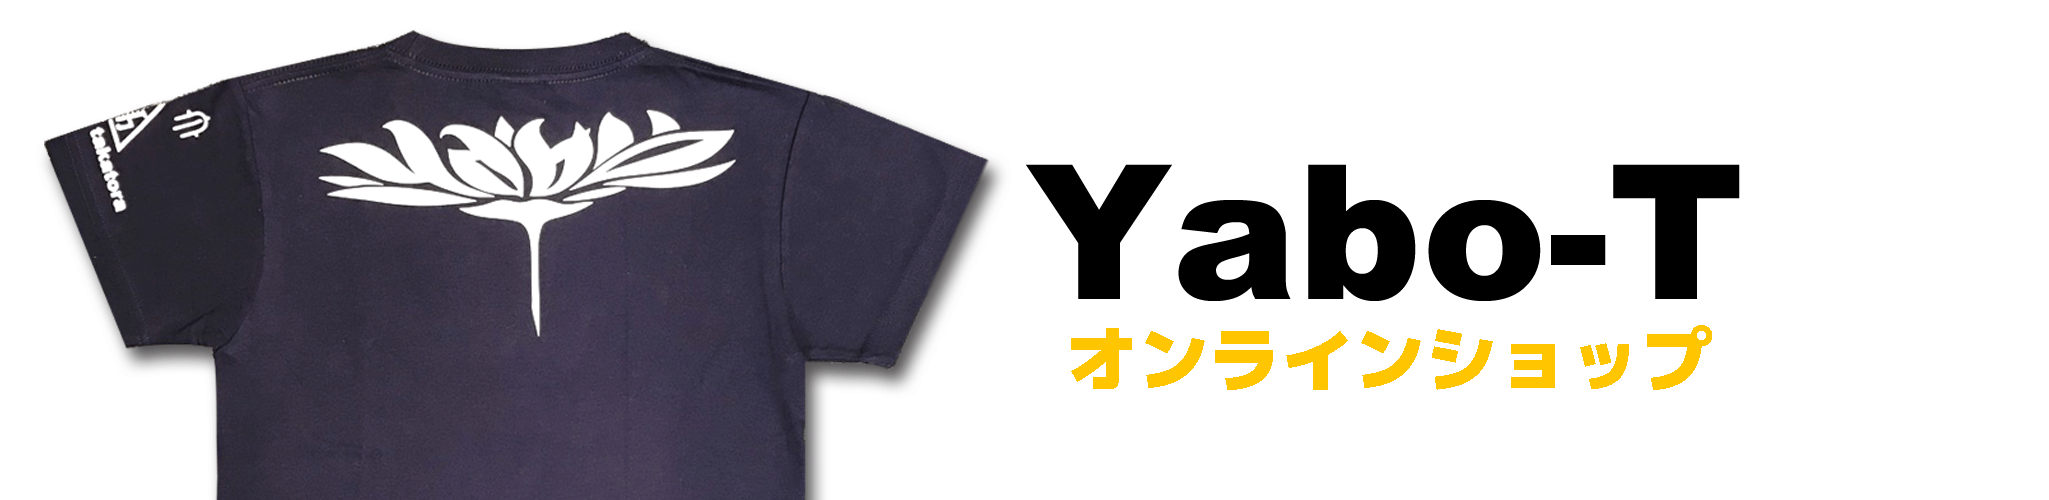 Yabo-Tオーダーフォーム